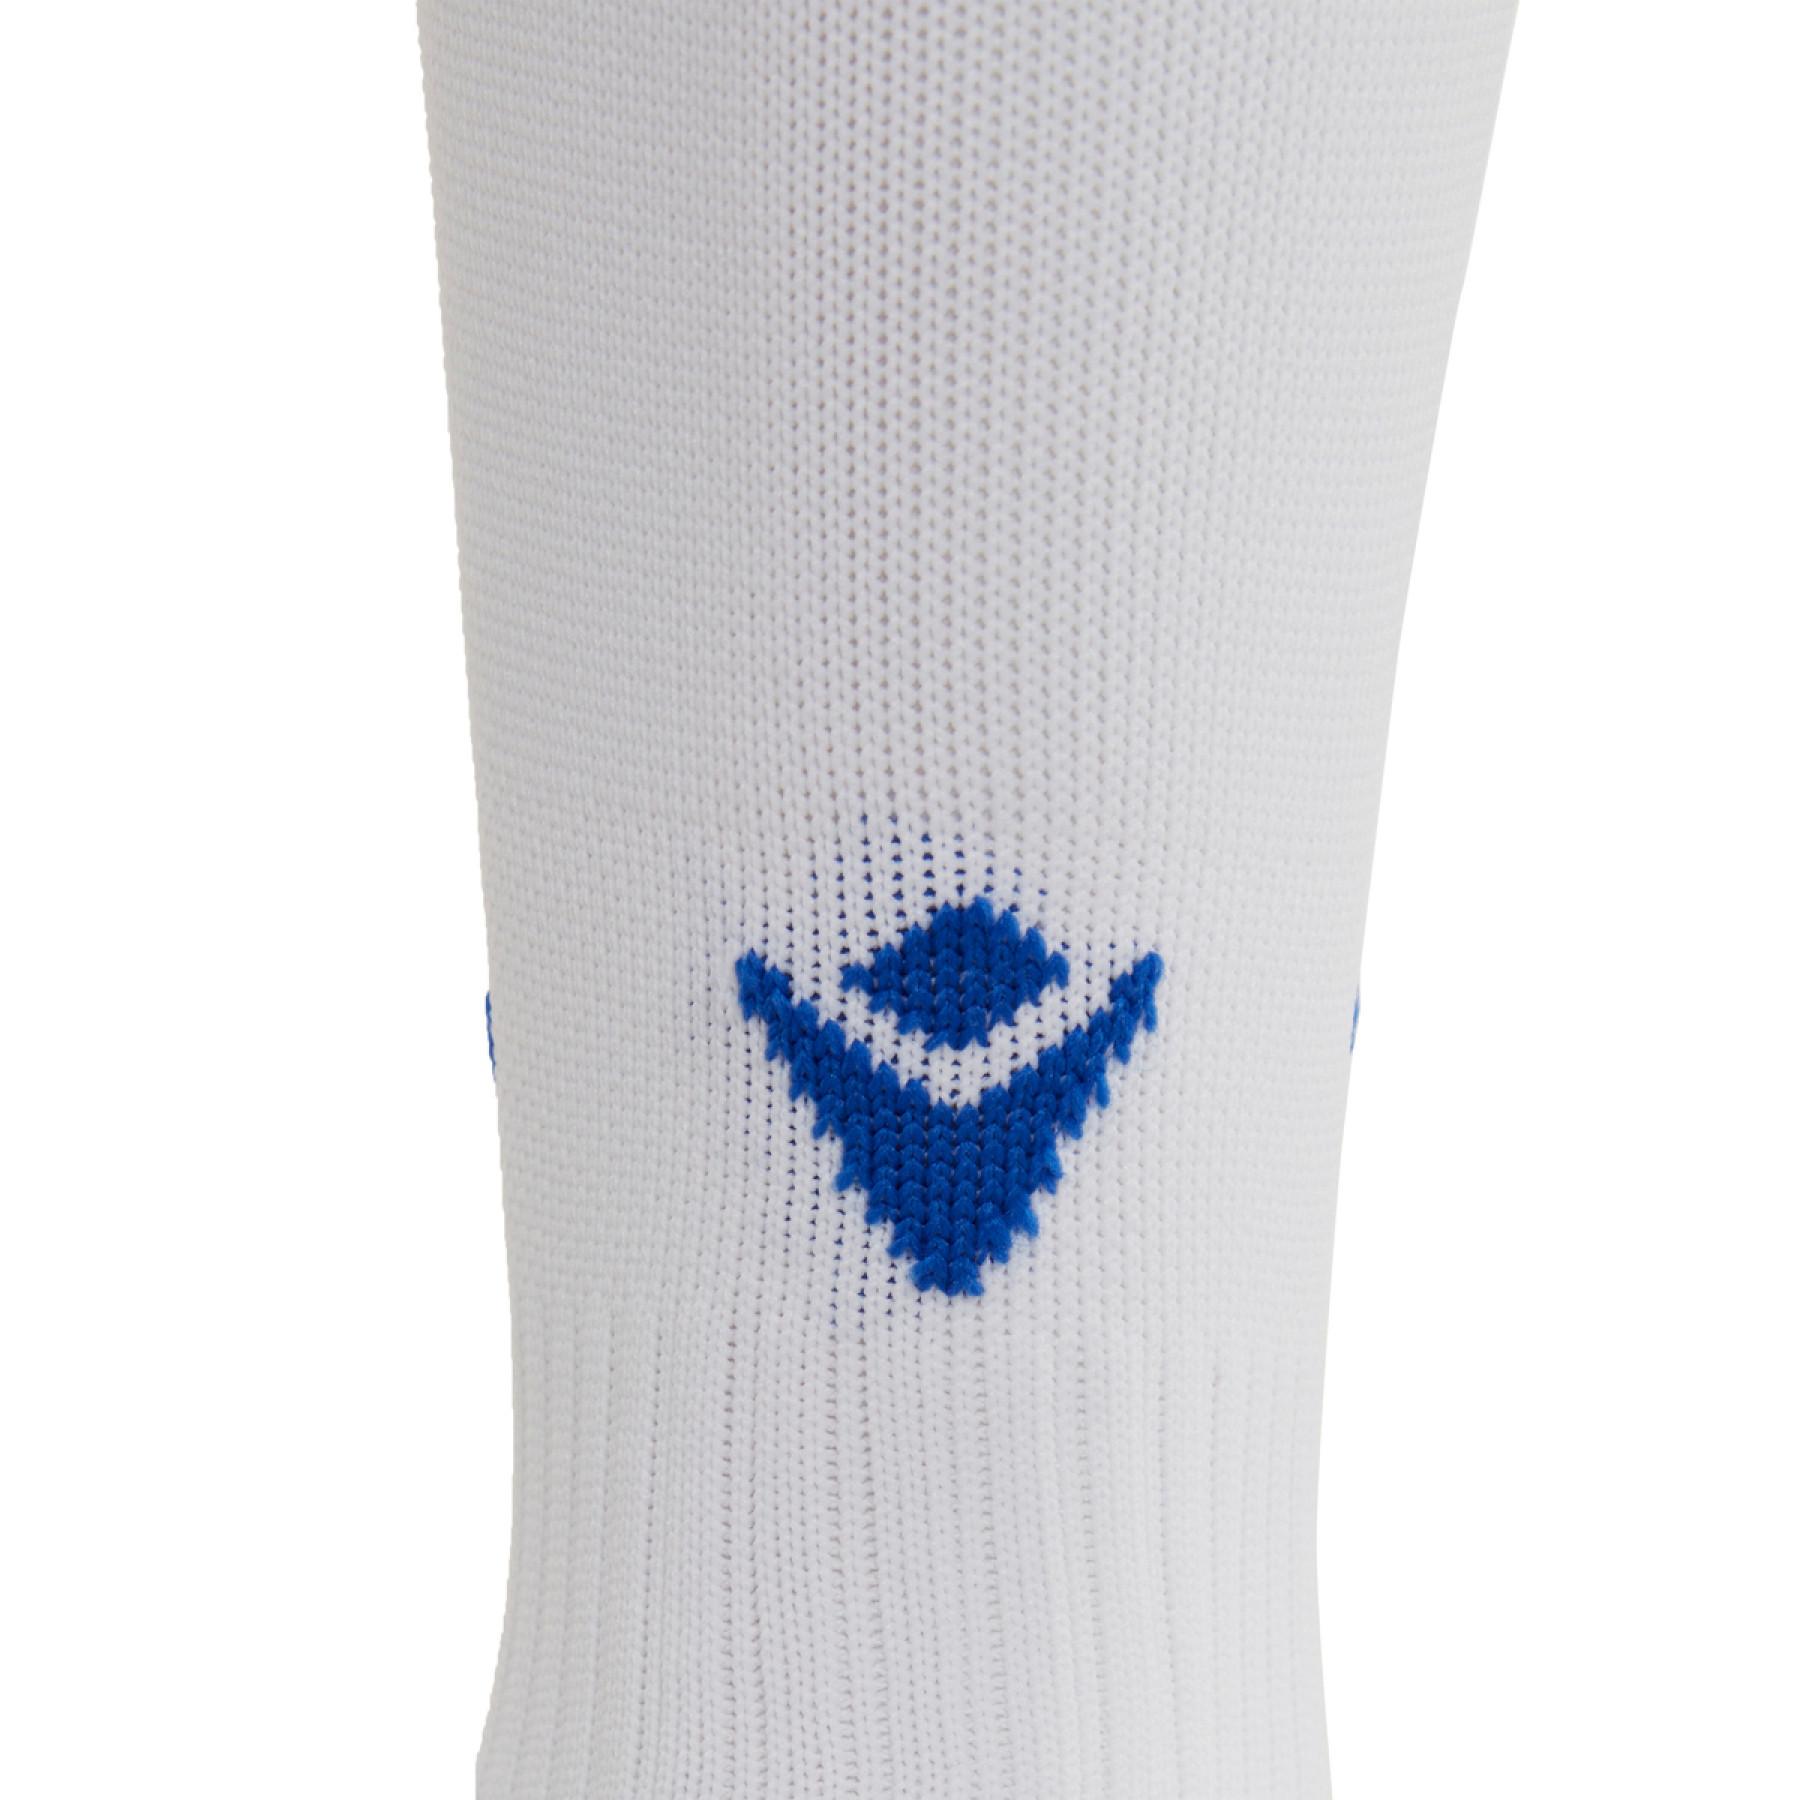 Home socks uc sampdoria 2020/21